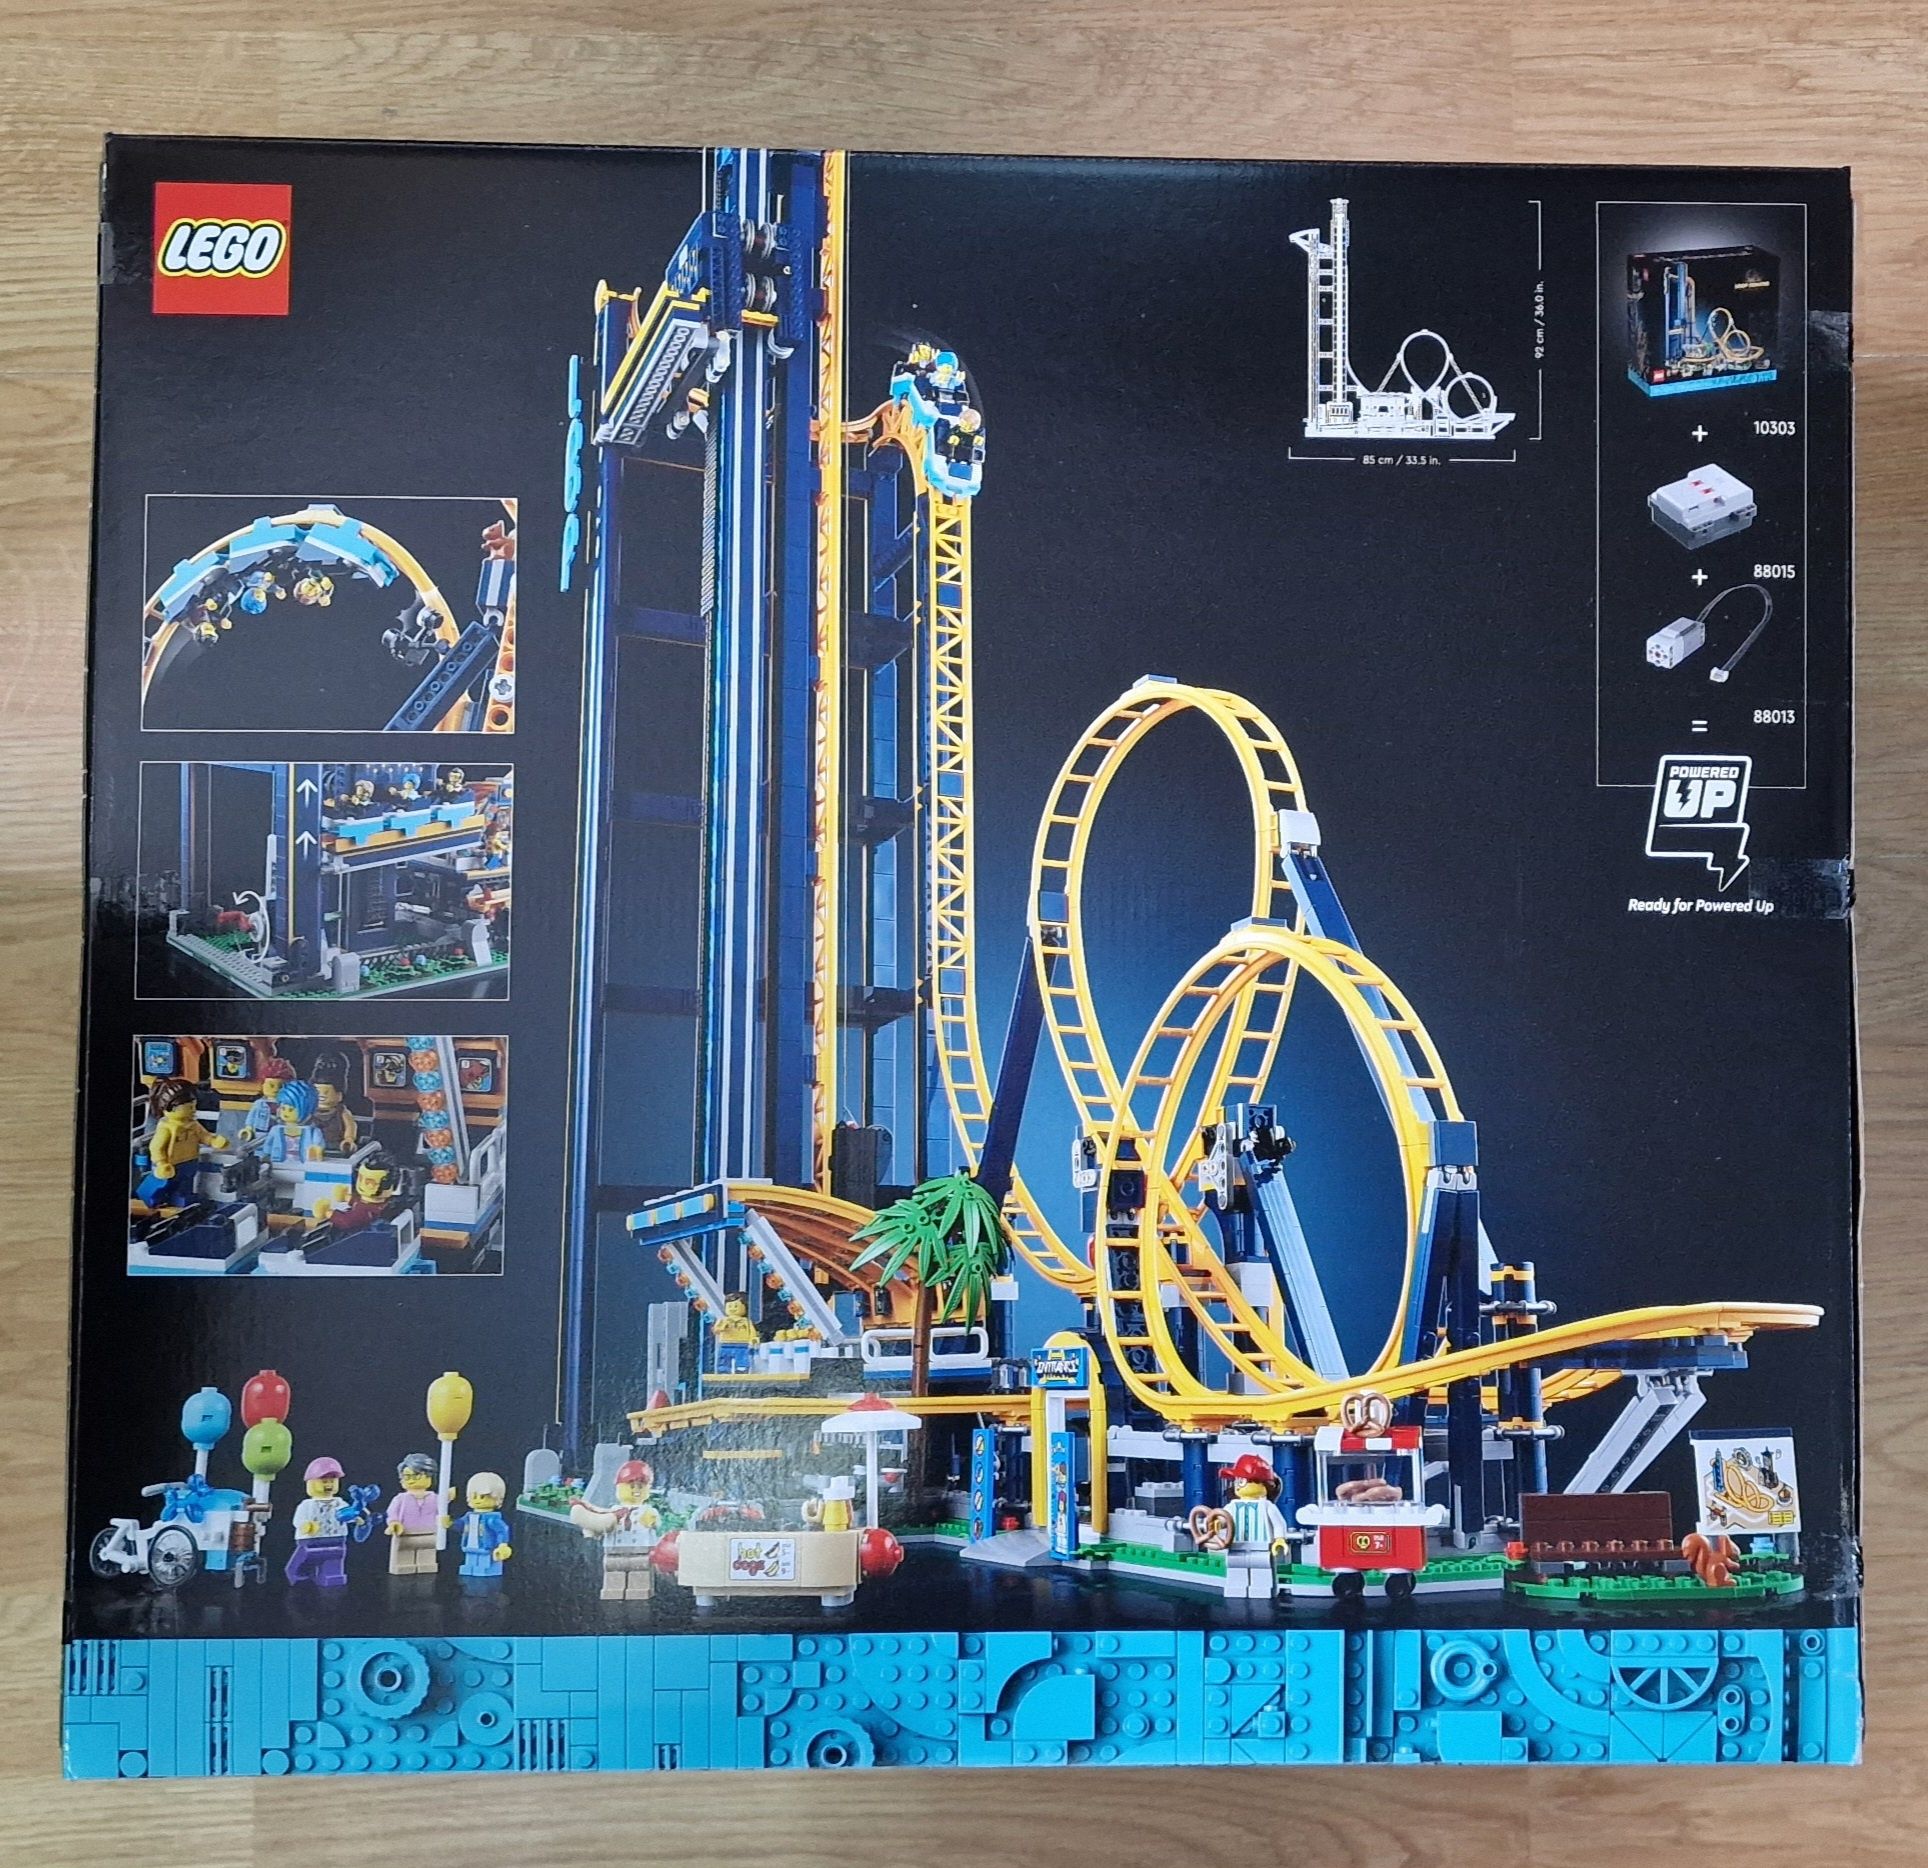 Vand LEGO Creator Expert - Roller coaster cu bucle 10303 Nou